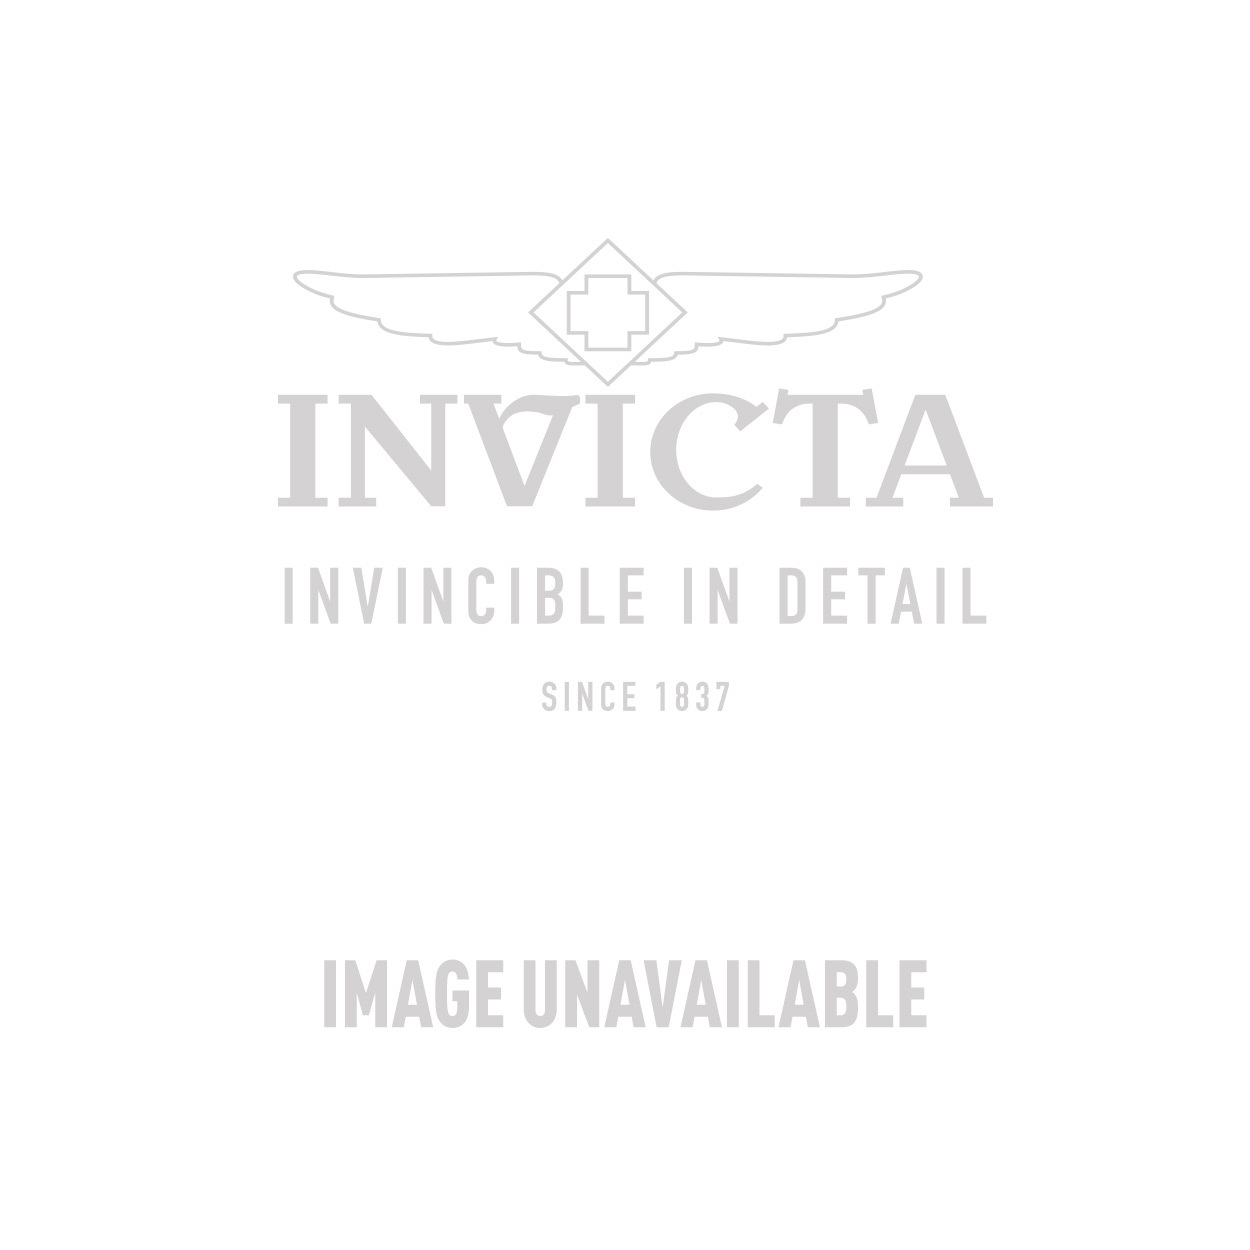 Invicta Angel Swiss Movement Quartz Watch Stainless Steel case Rose Gold - Model 11736